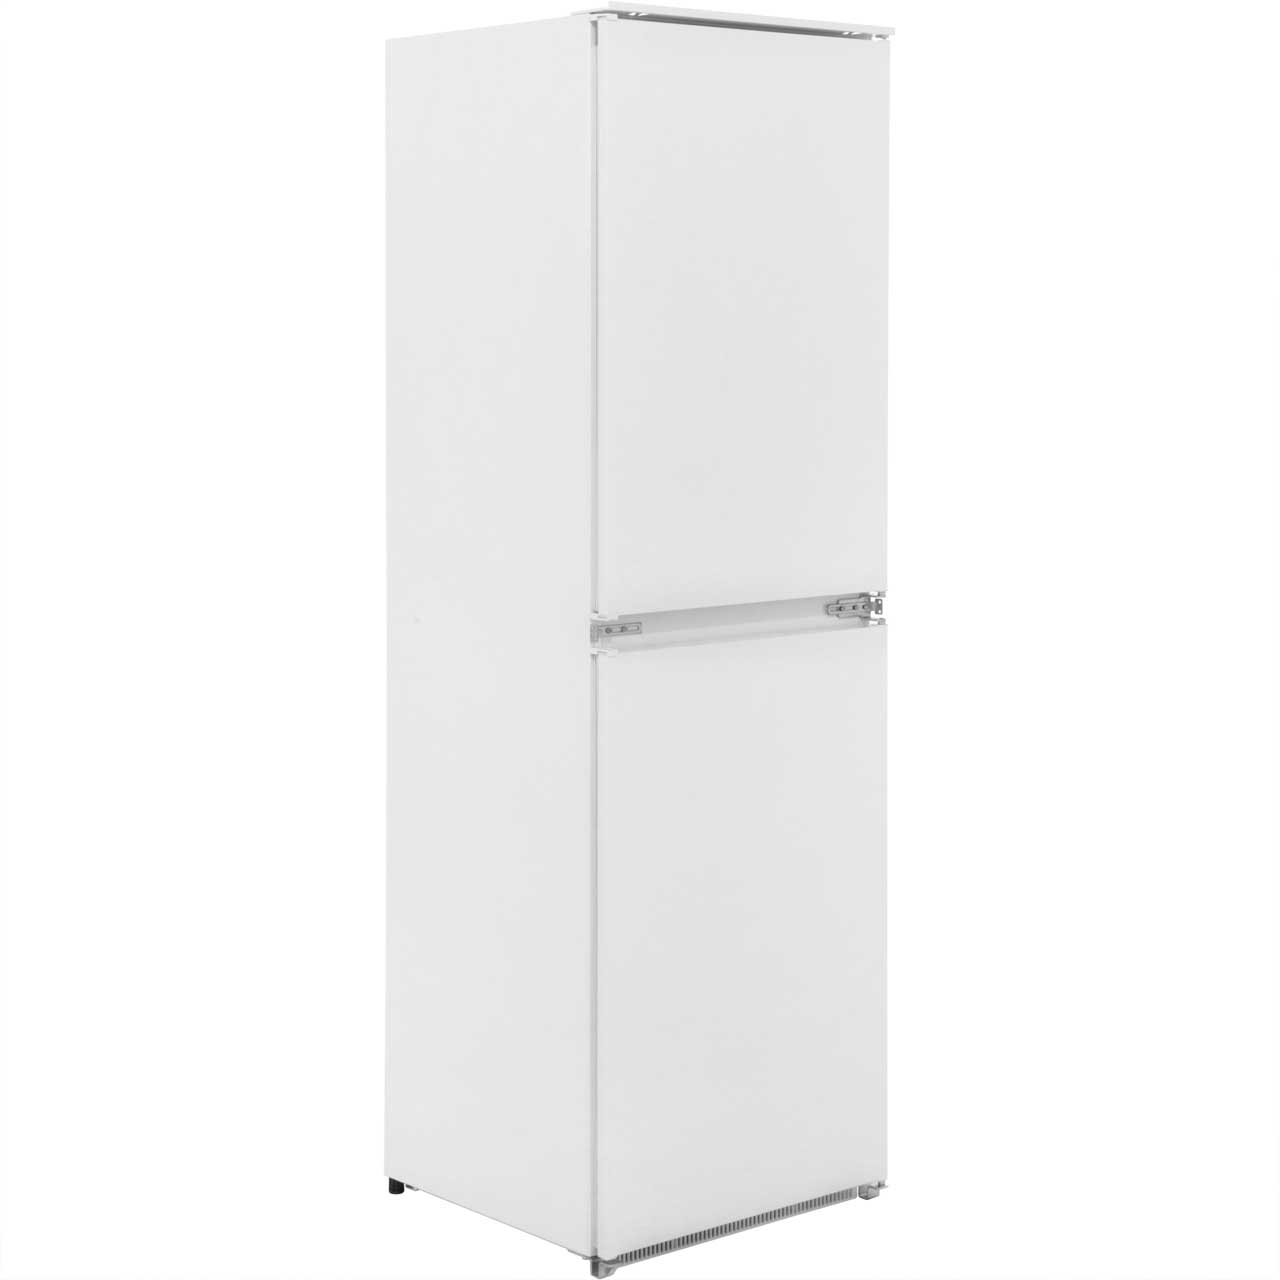 AEG SCN51810S0 Integrated Fridge Freezer Frost Free in White